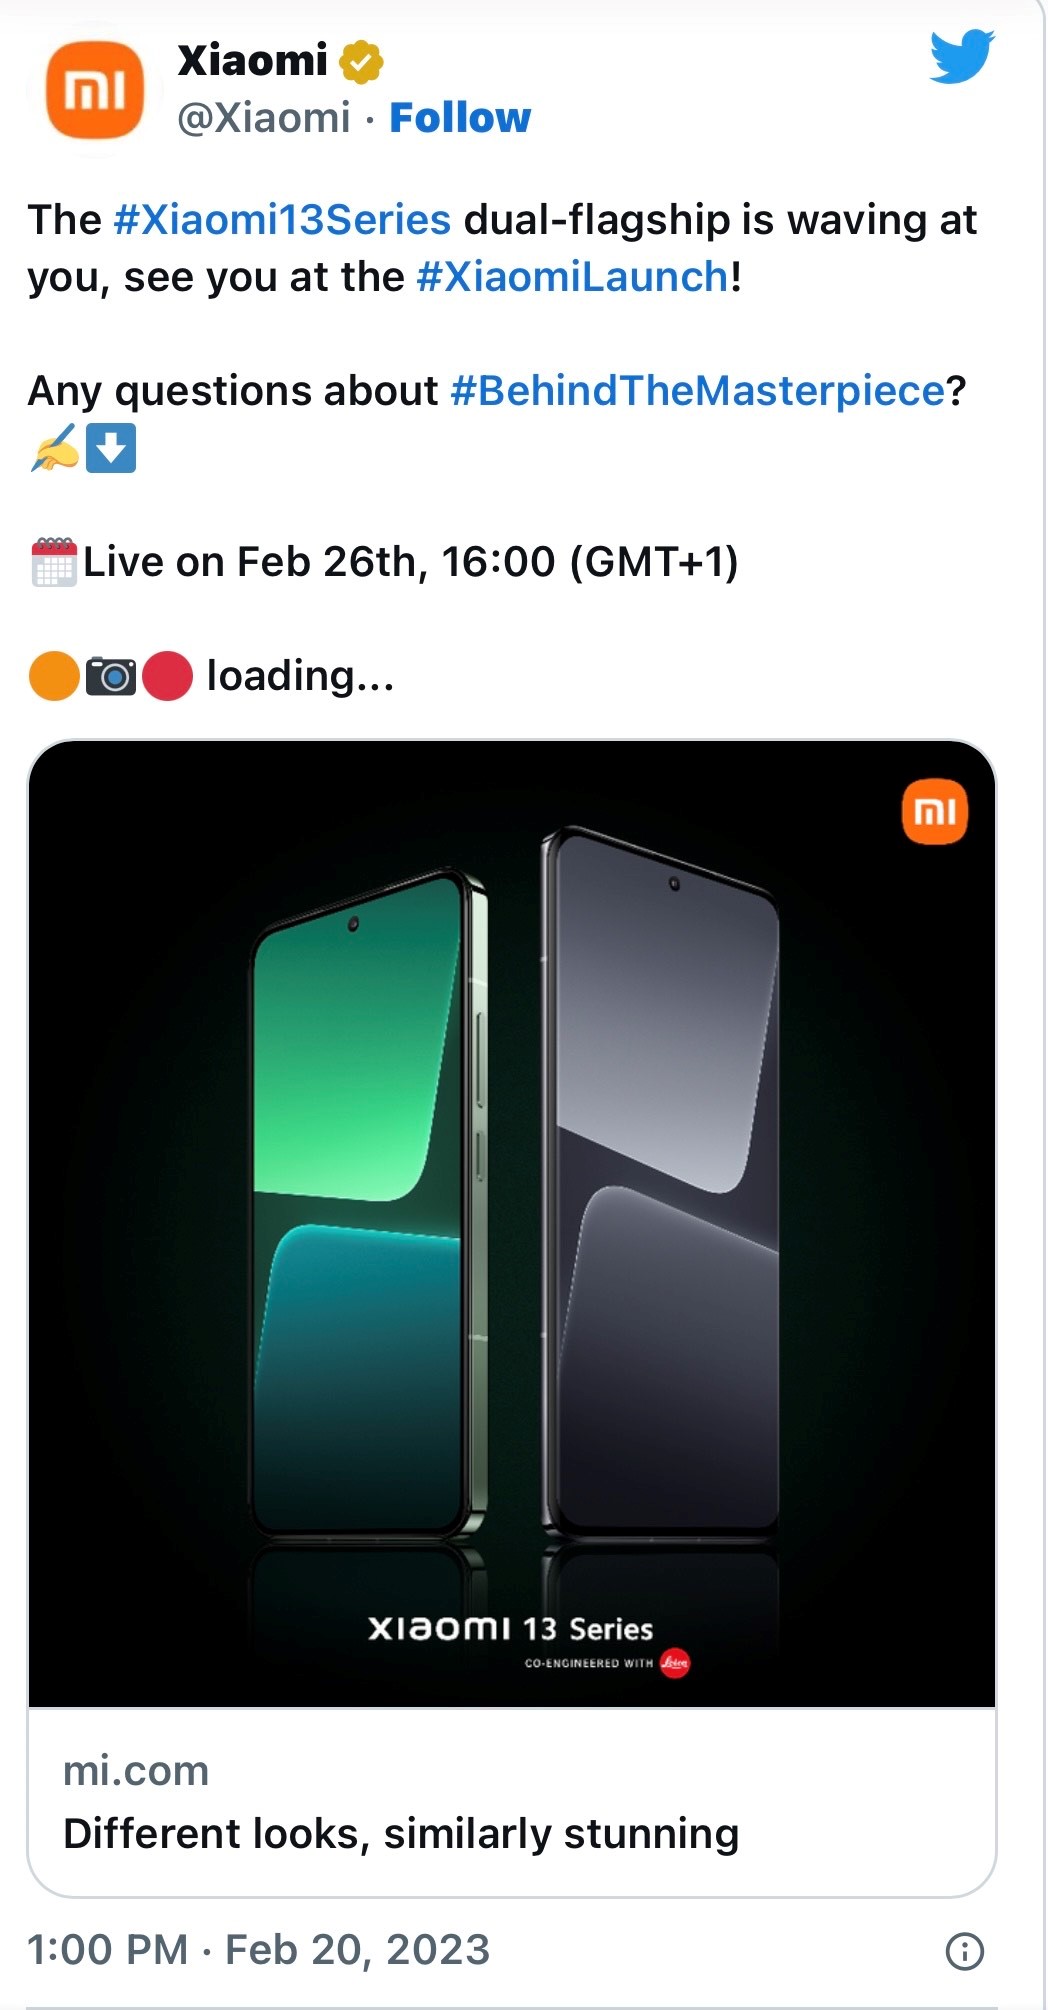 Xiaomi 13 Lite